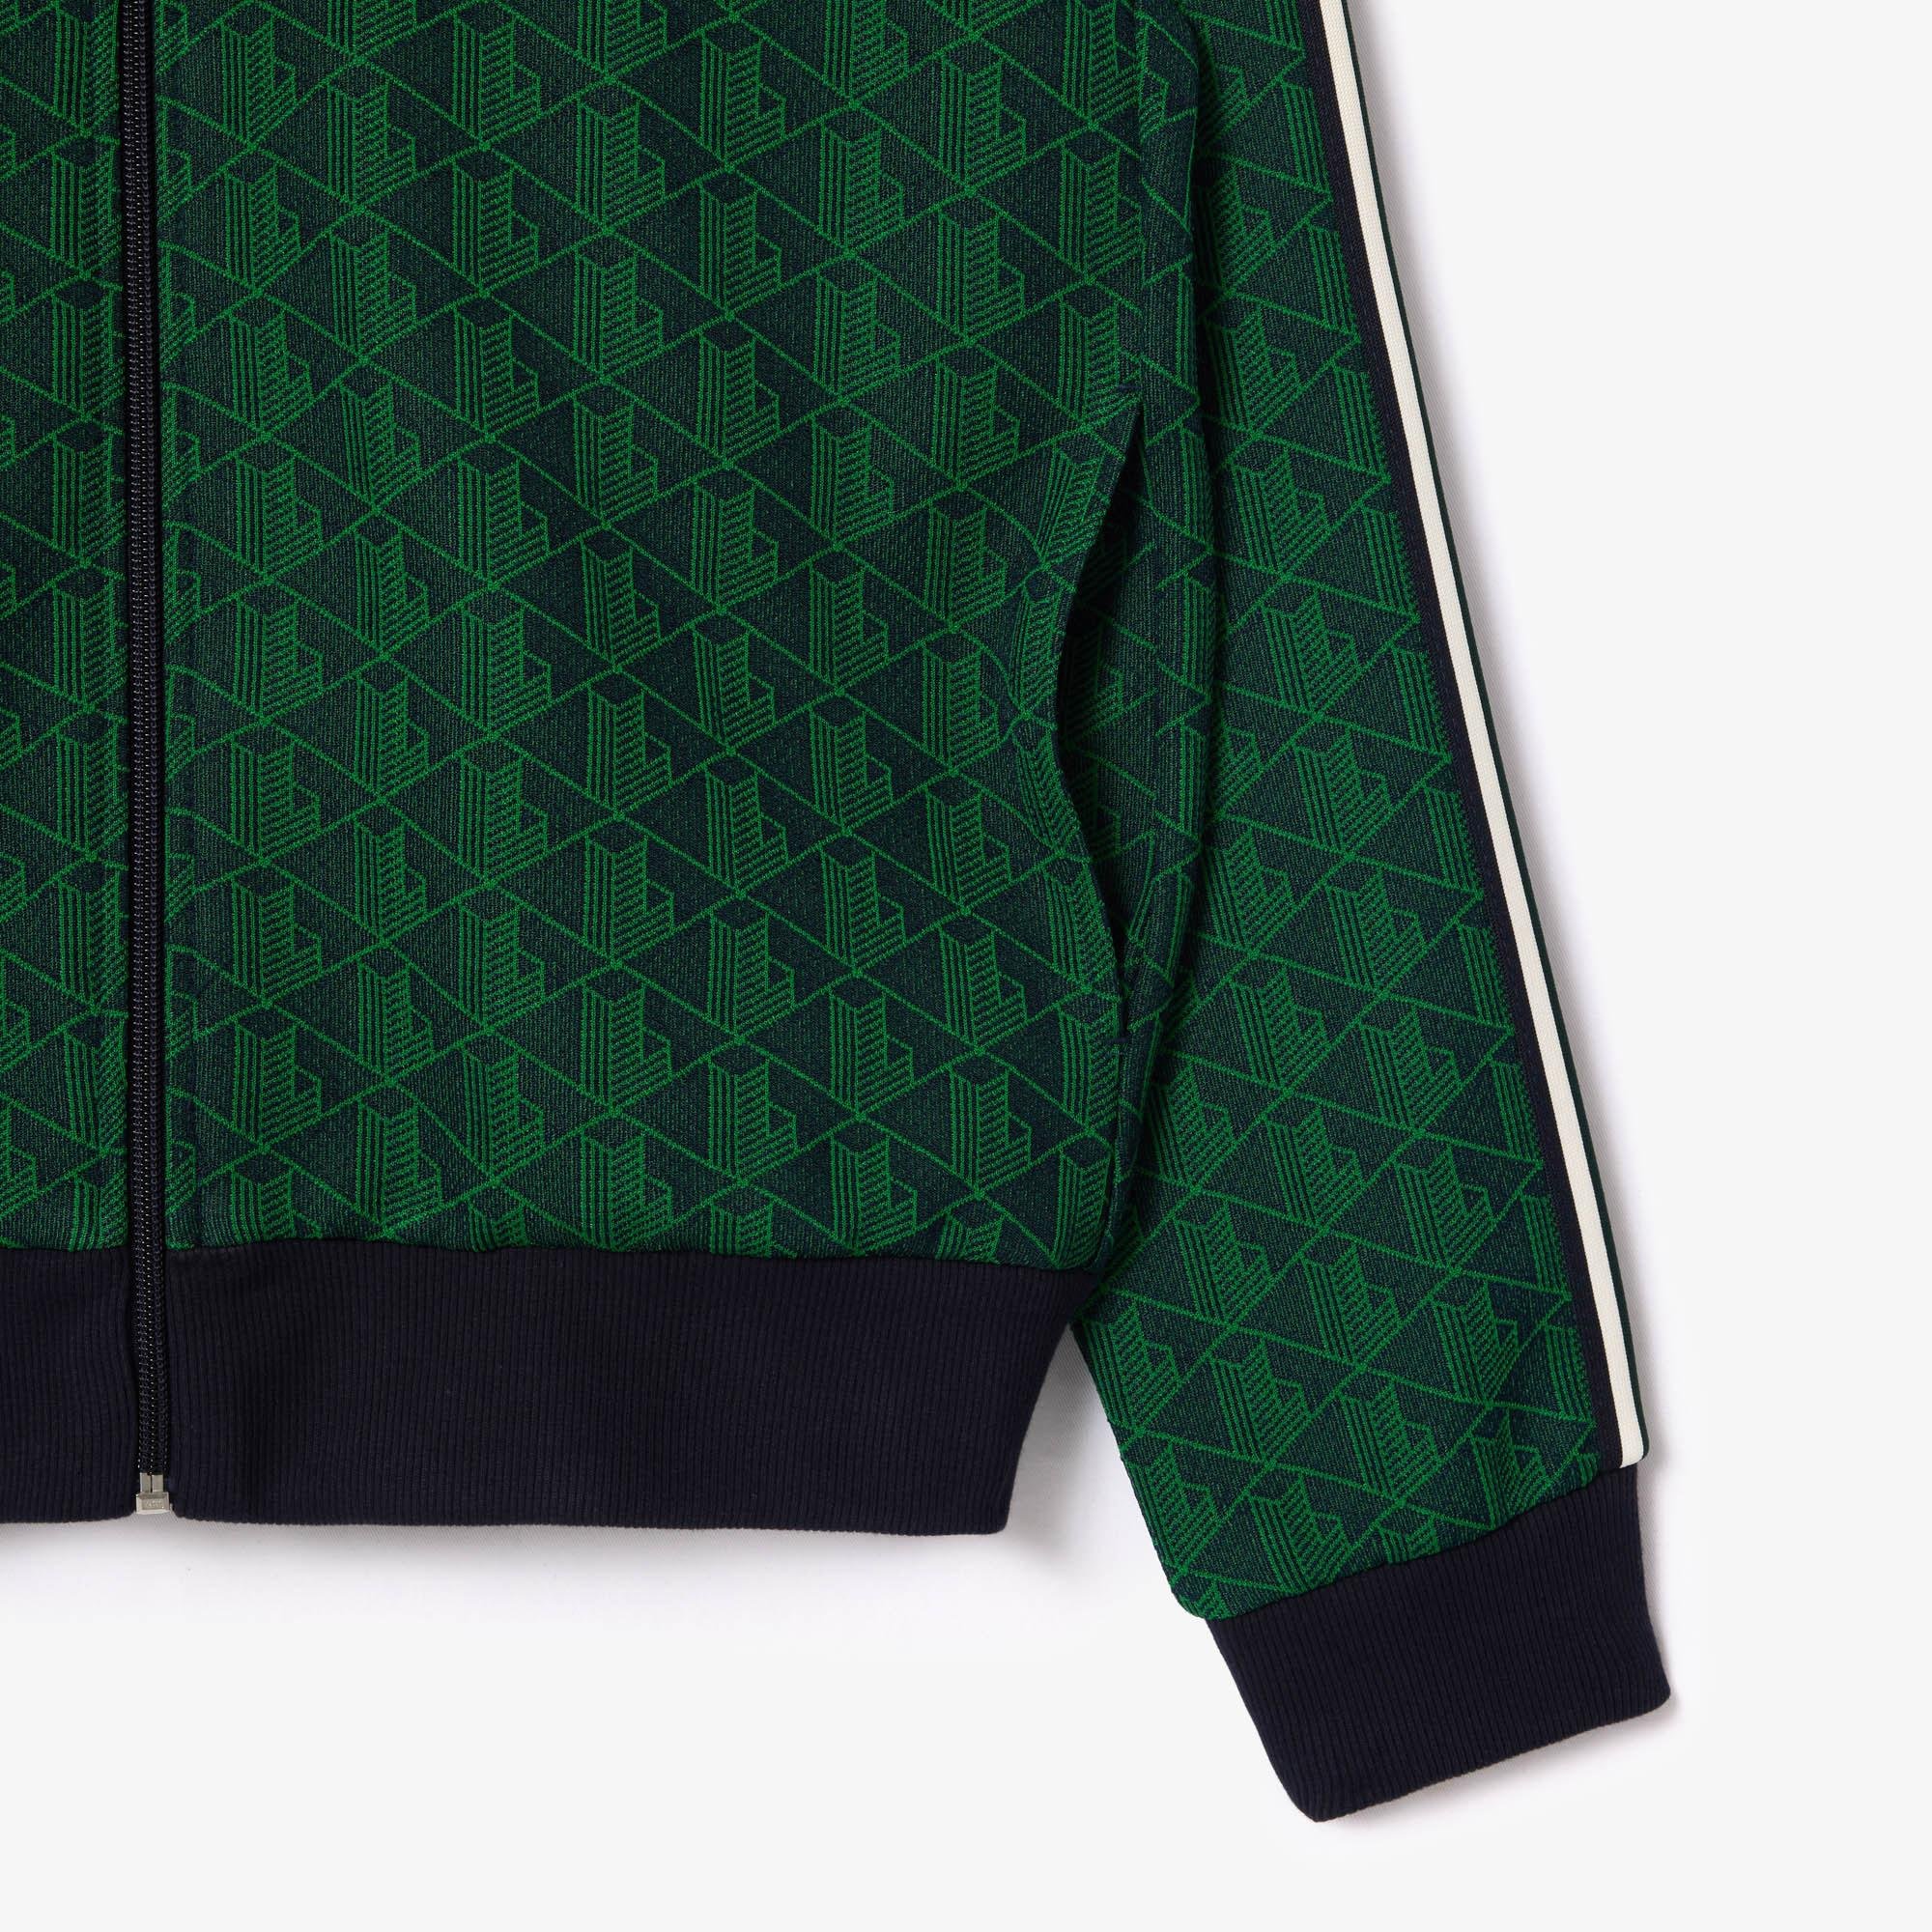 Lacoste Erkek Regular Fit Fermuarlı Monogram Yeşil Sweatshirt